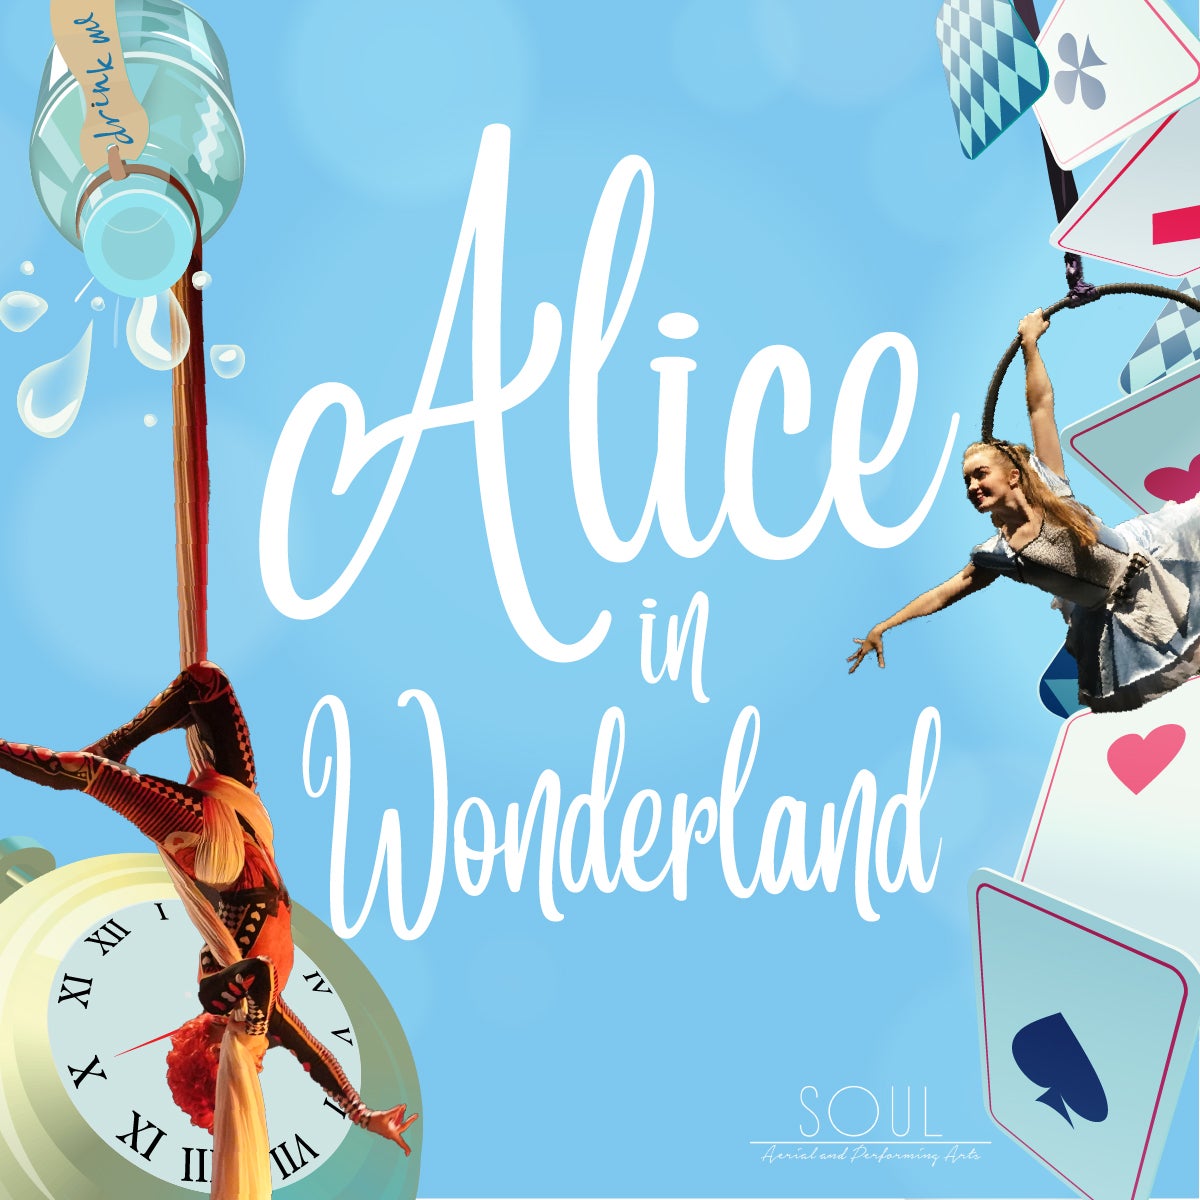 Poster Alice in wonderland - alice | Wall Art, Gifts & Merchandise 